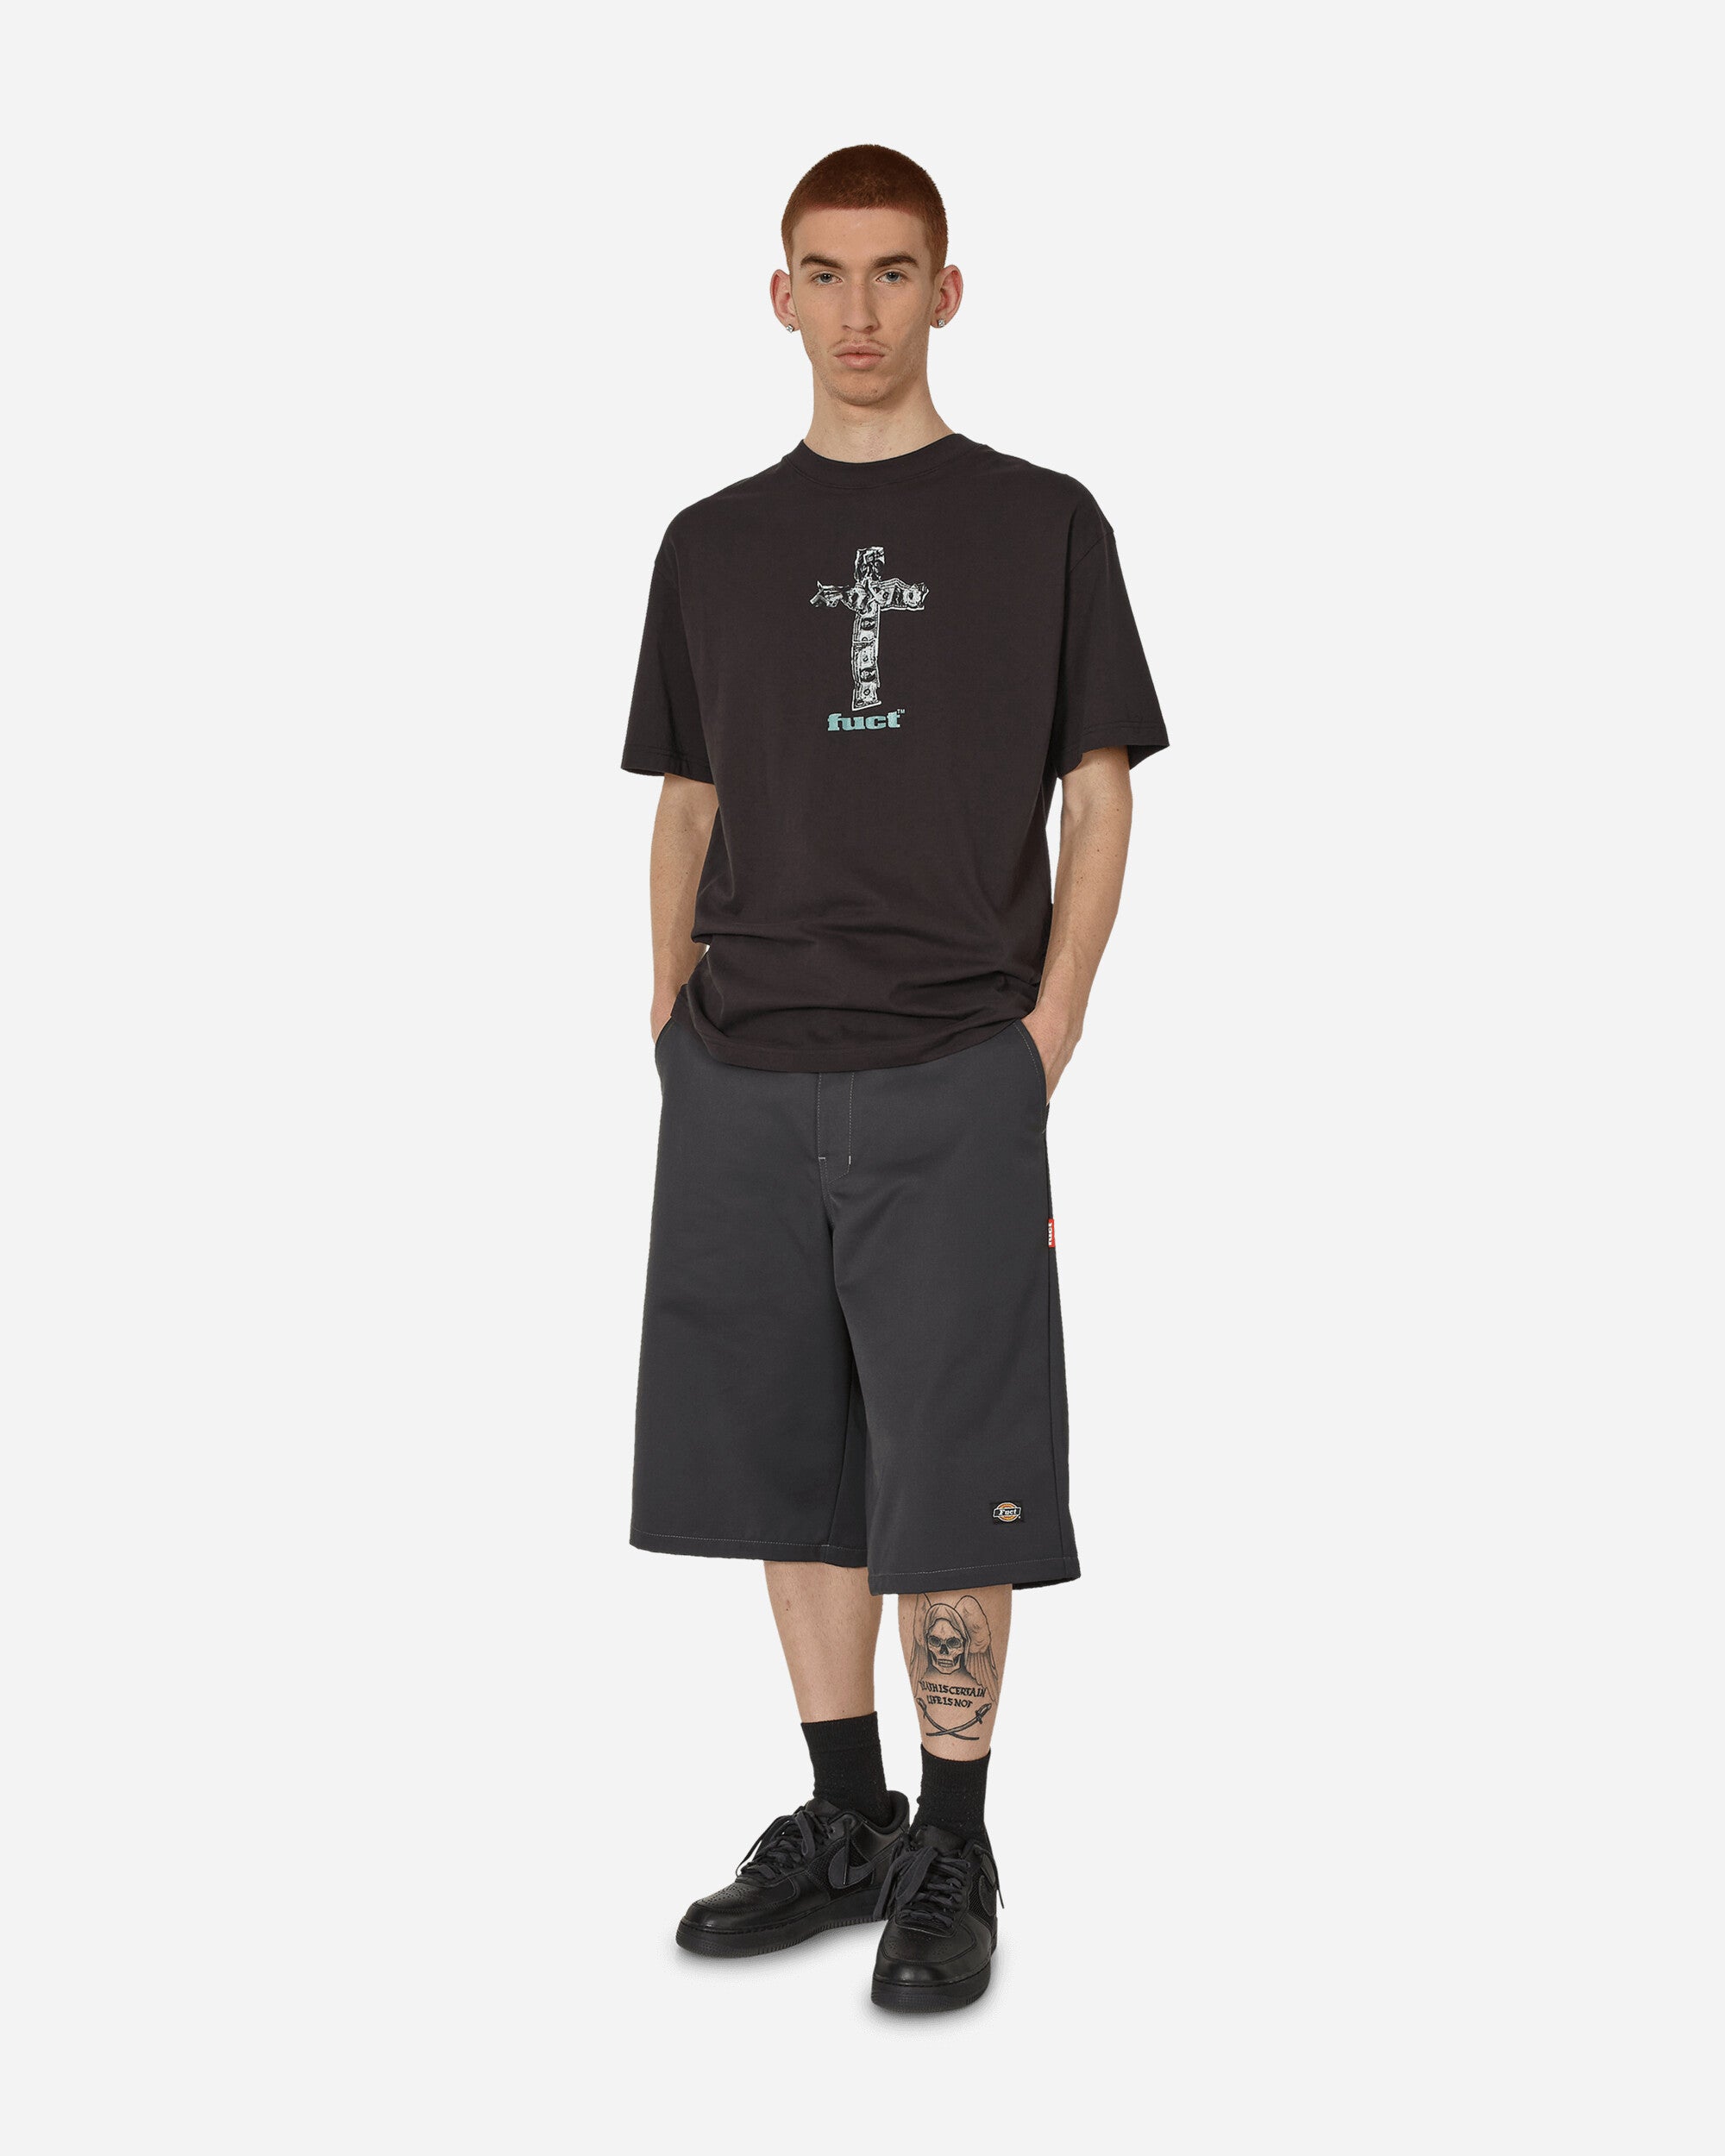 Ca$h Cross T-Shirt Black